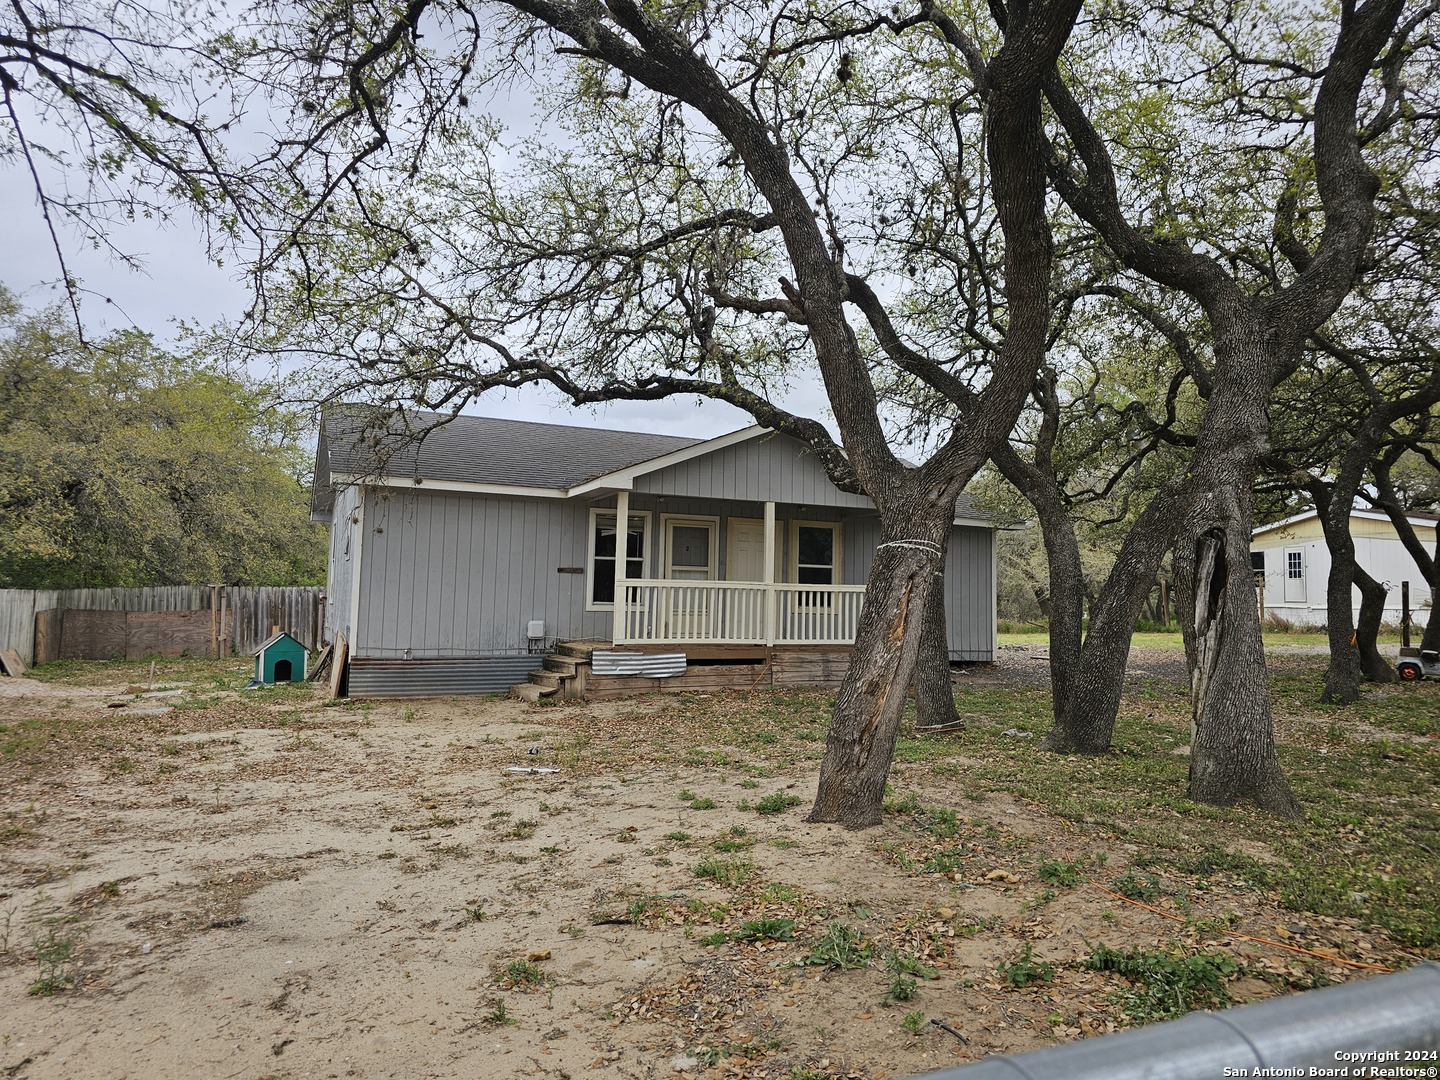 View Poteet, TX 78065 property